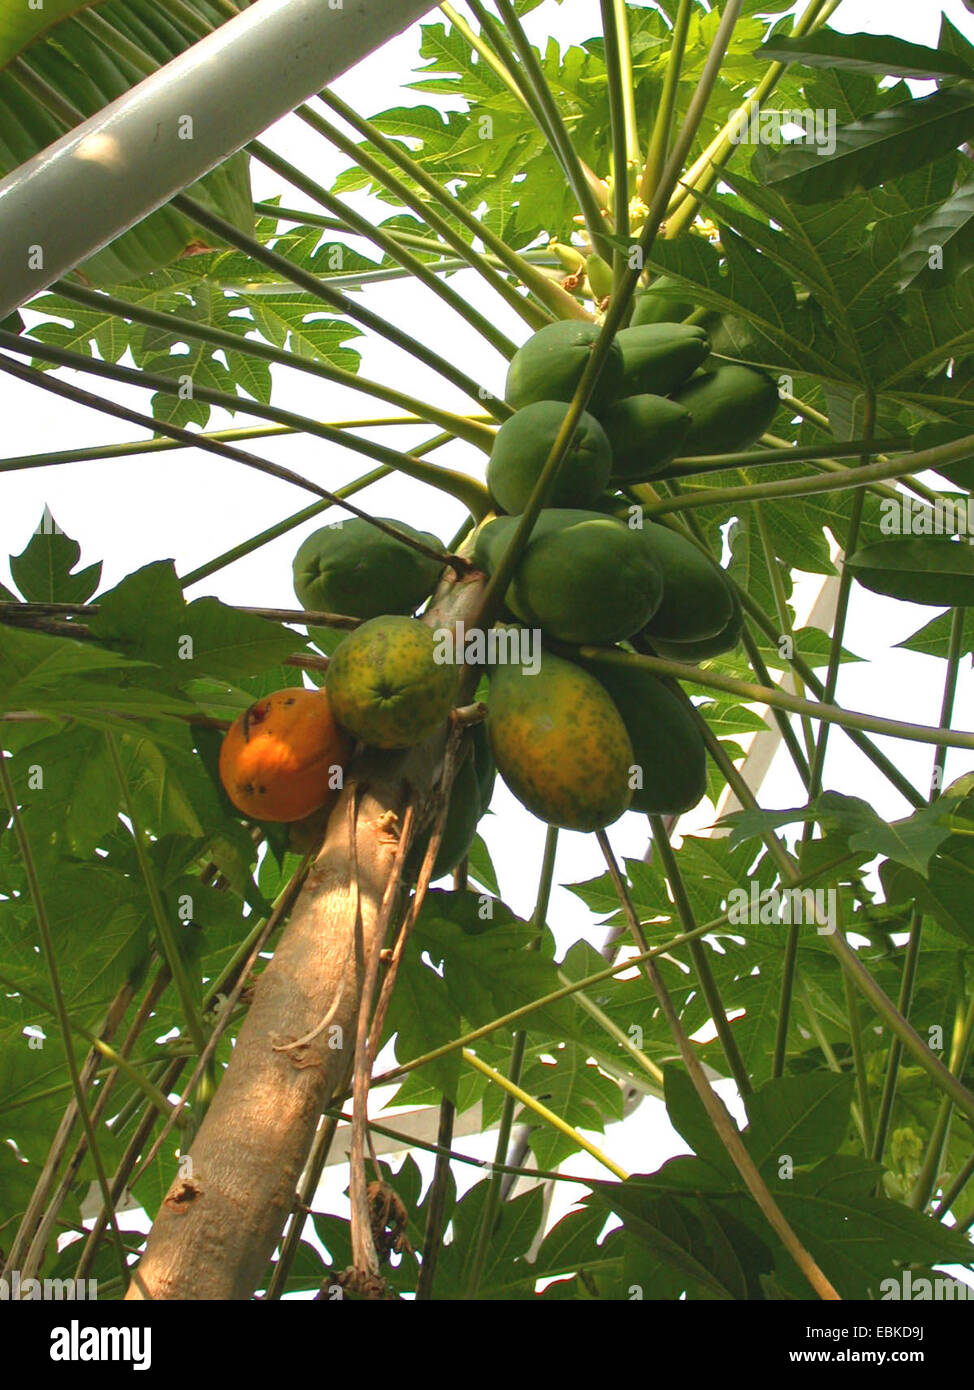 papaya, papaw, paw paw, mamao, tree melon (Carica papaya), fruits on a tree in a green house Stock Photo